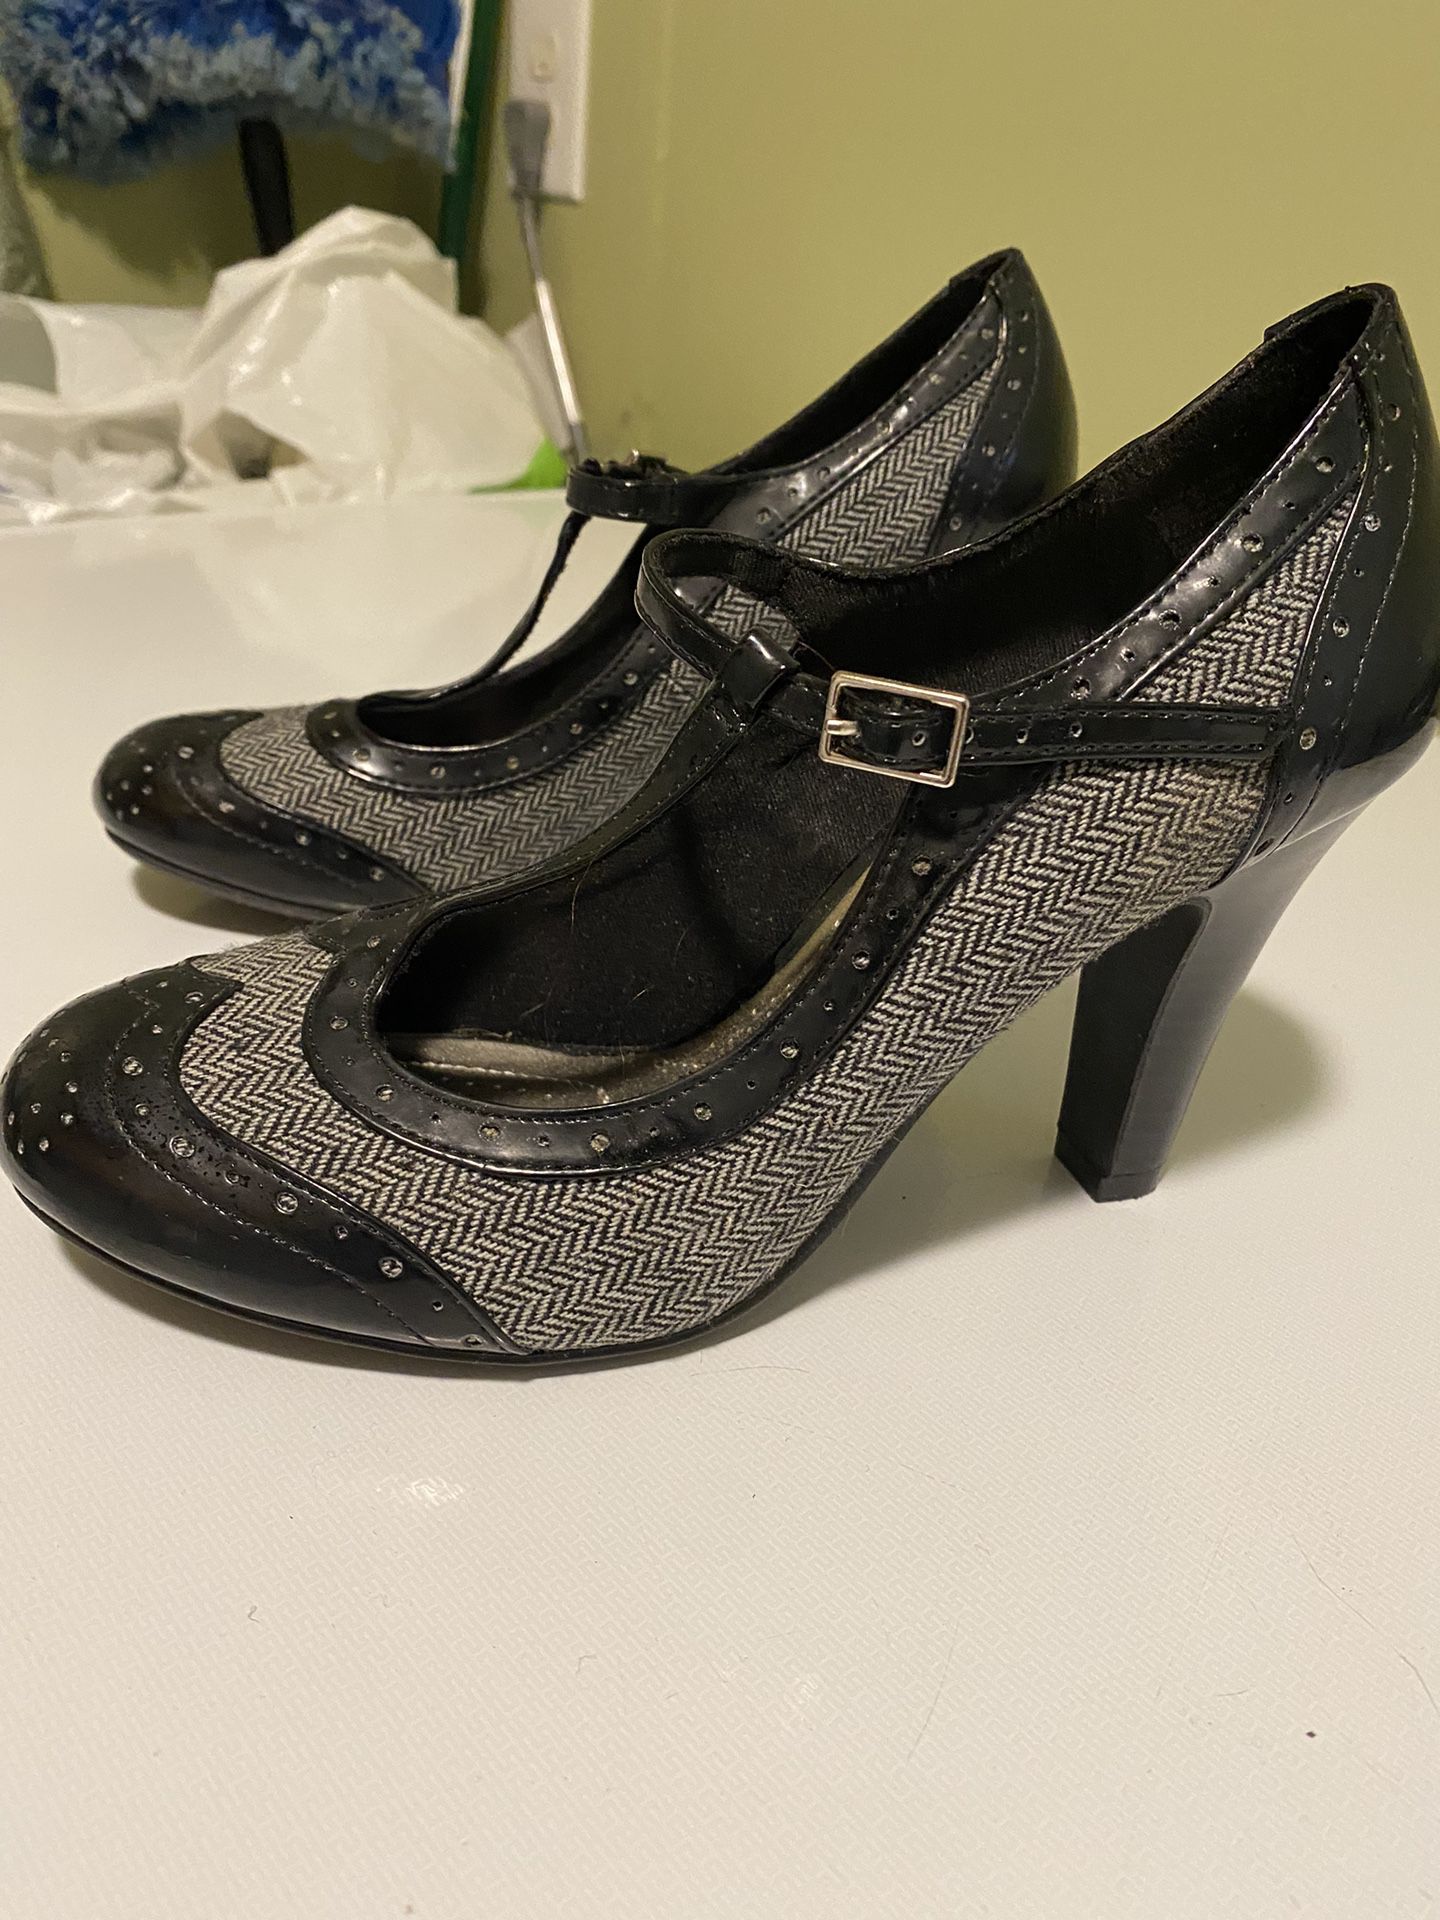 Ladies Black & Gray Dexflex Brand High Heel Shoes 